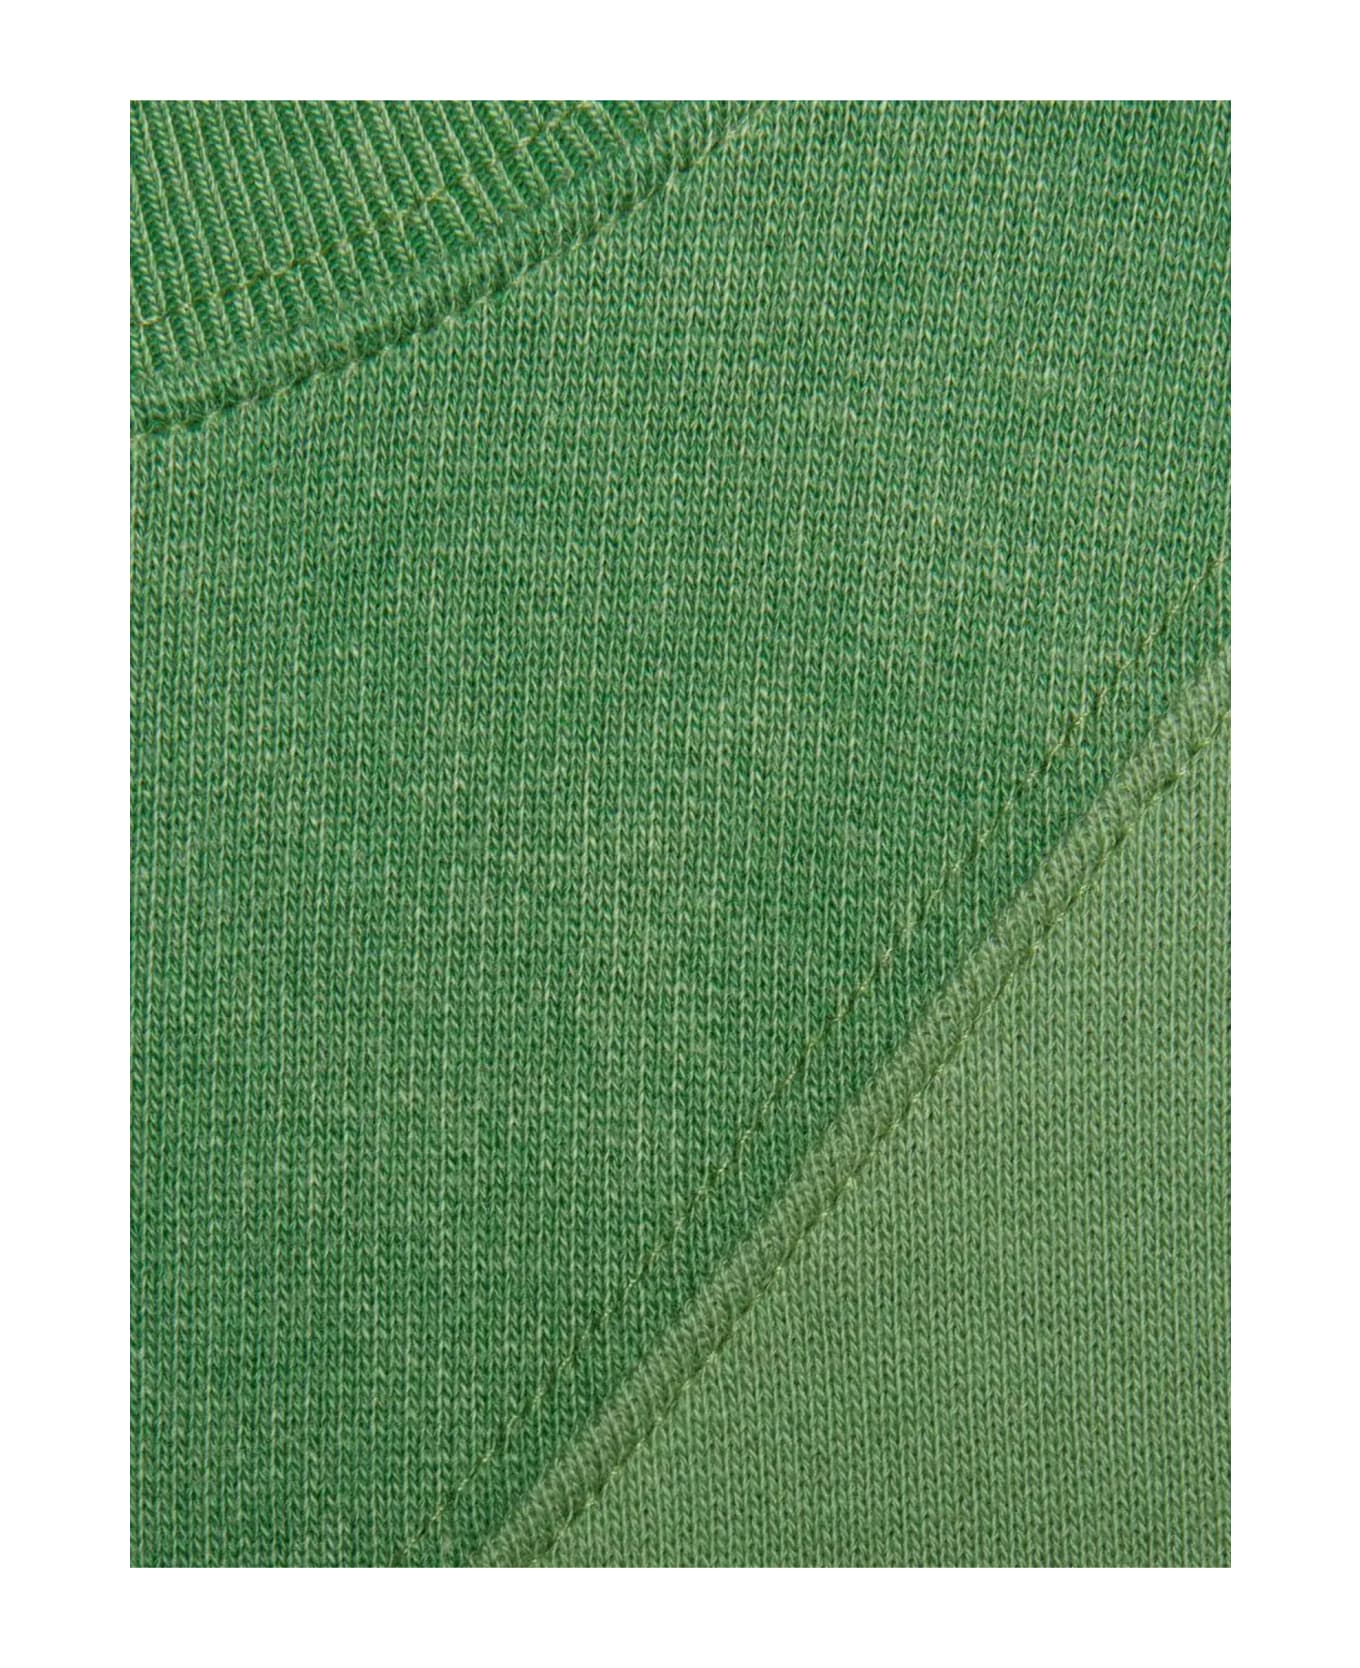 Gucci Green Cotton Sweatshirt - Verde